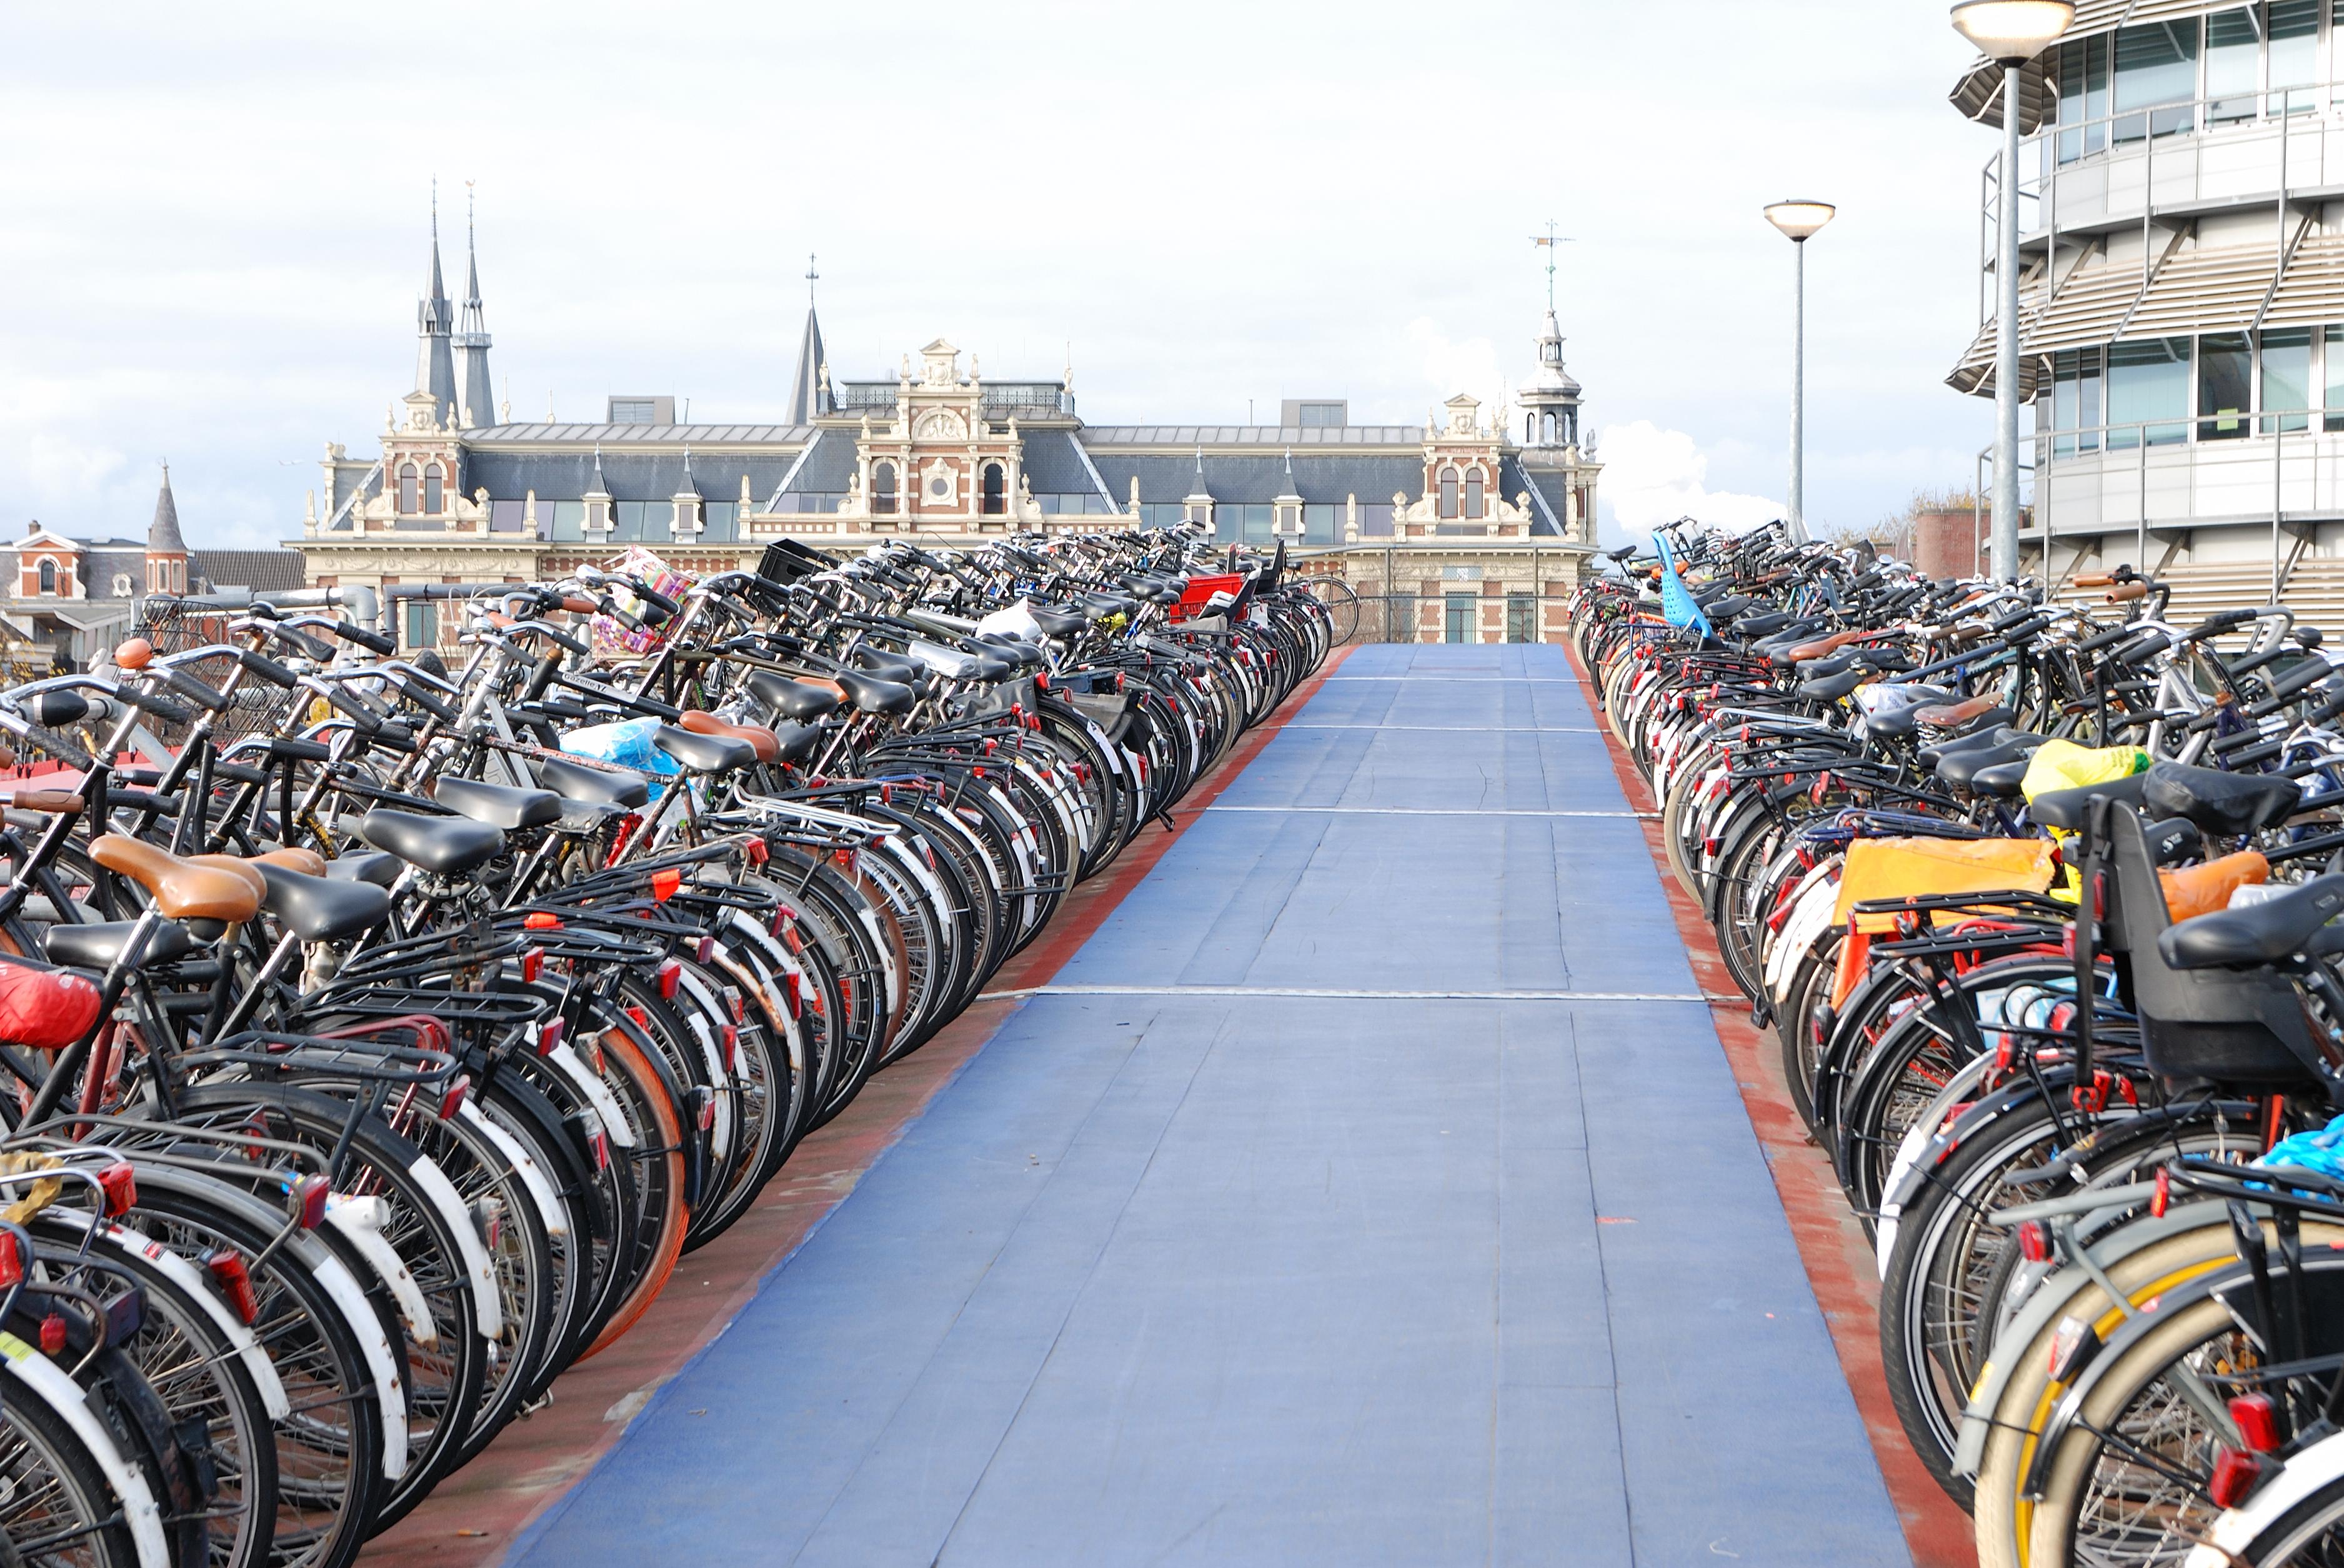 Нидерланды велосипеды